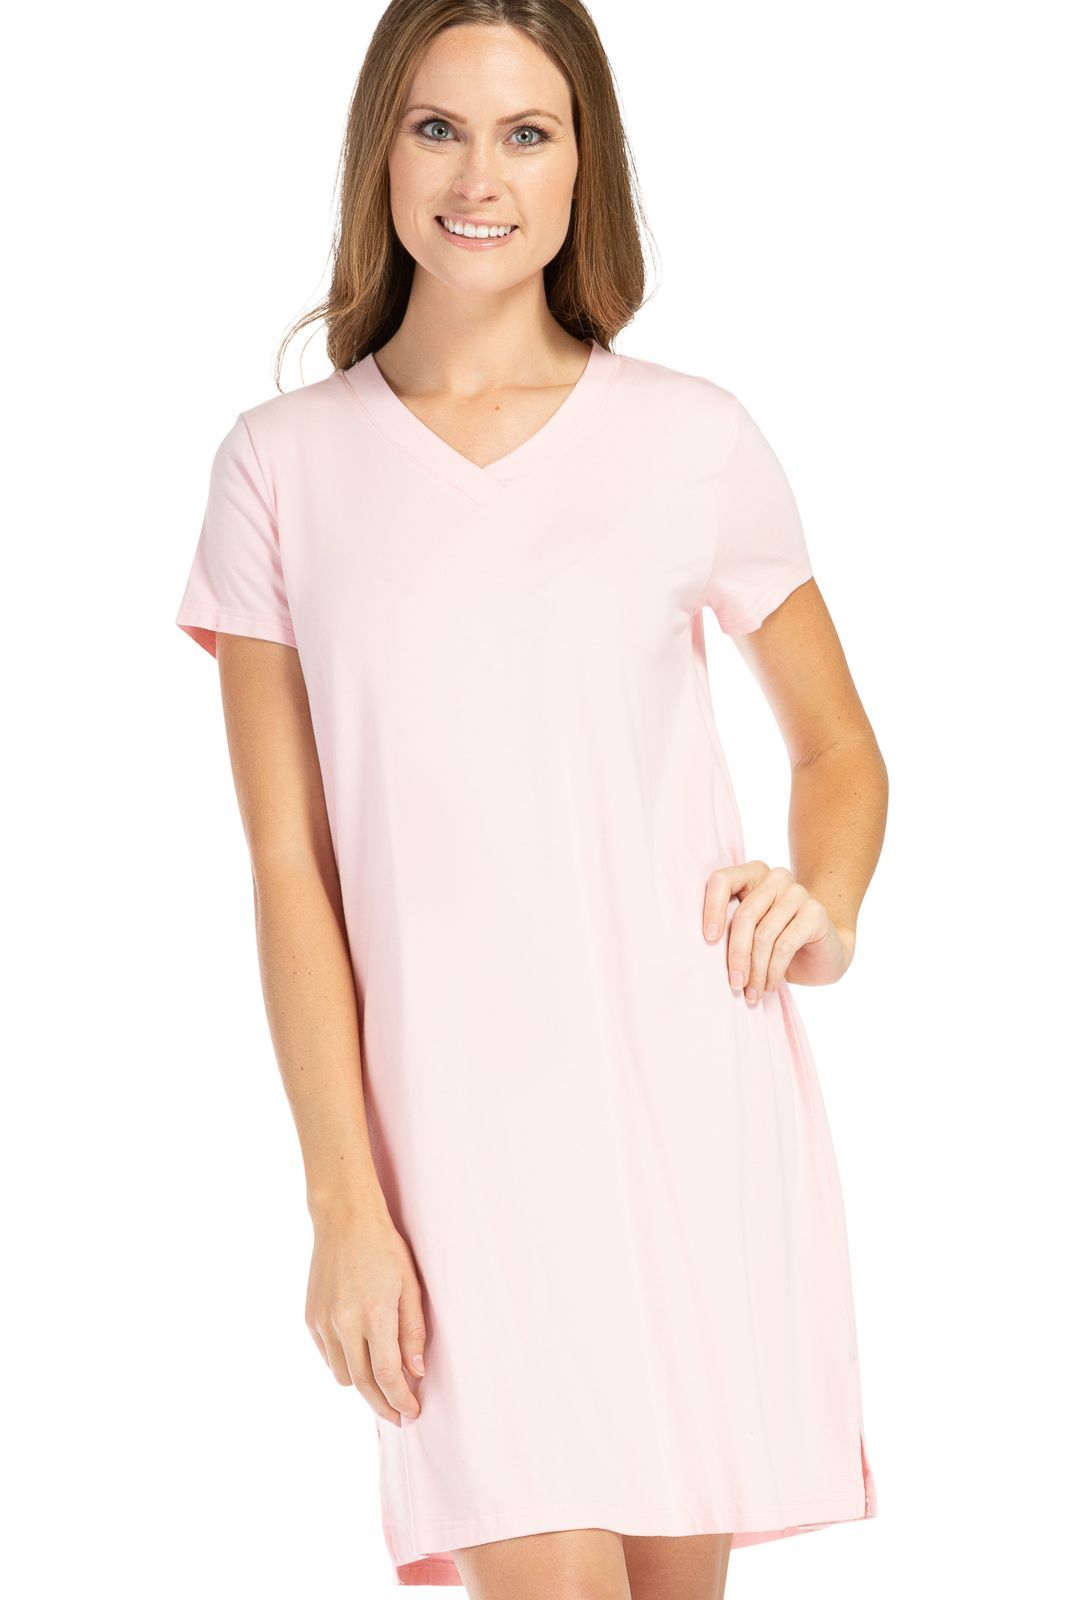 Amazing Women's Night Dress - 100% Cotton Sleep Shirts - Ladies